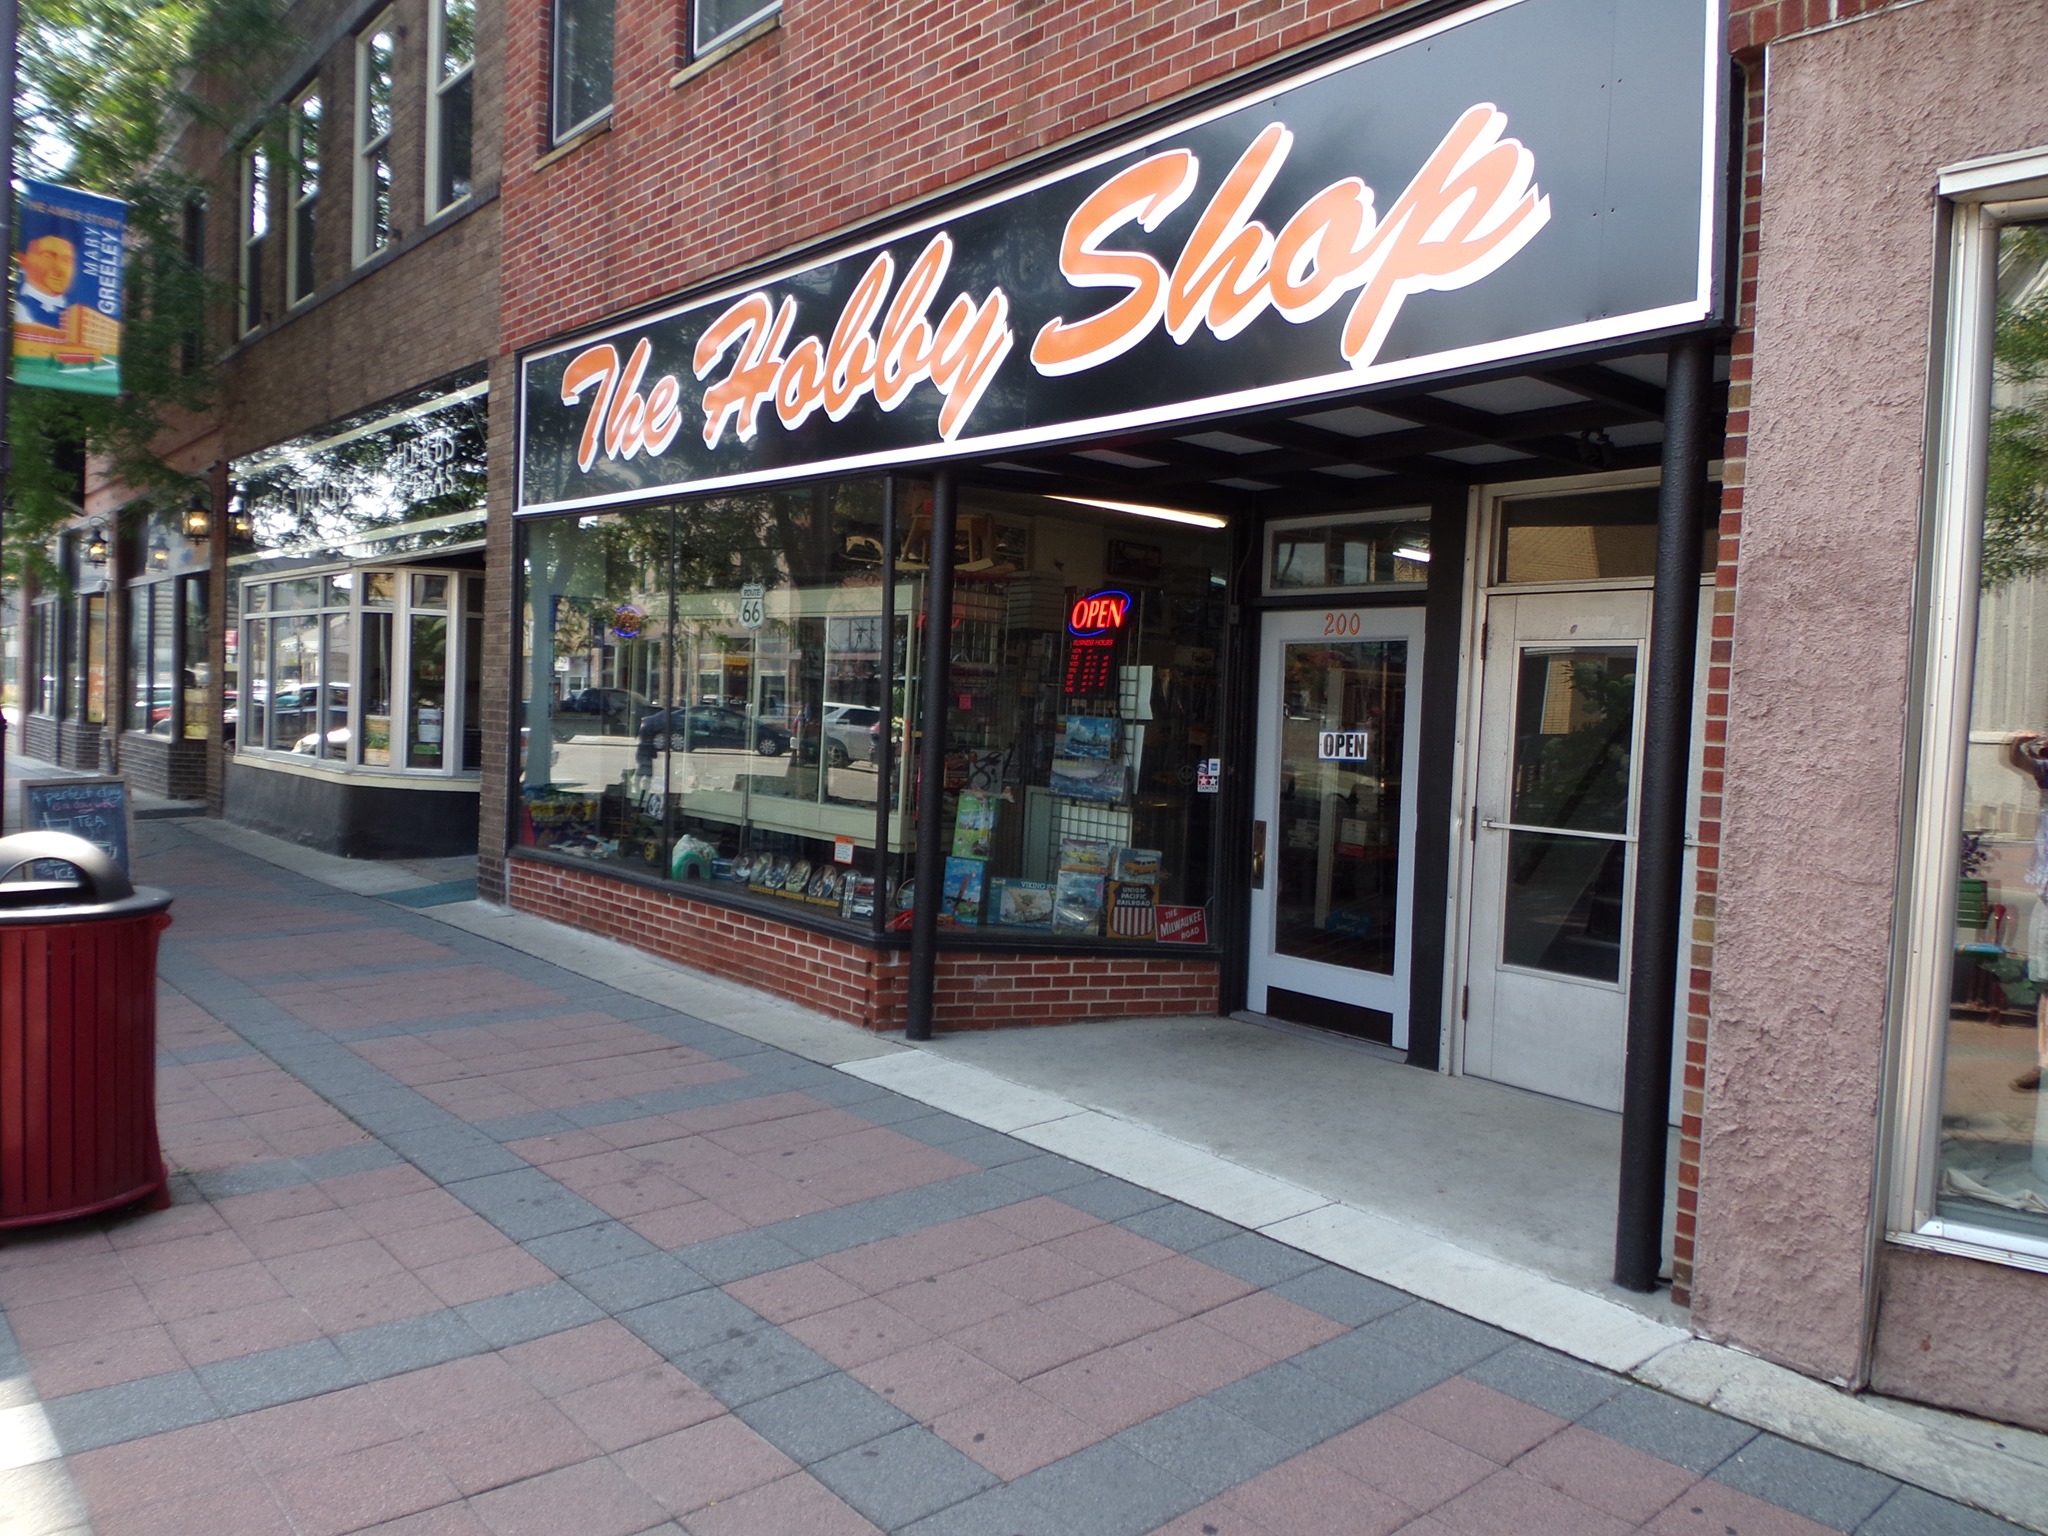 The Hobby Shop